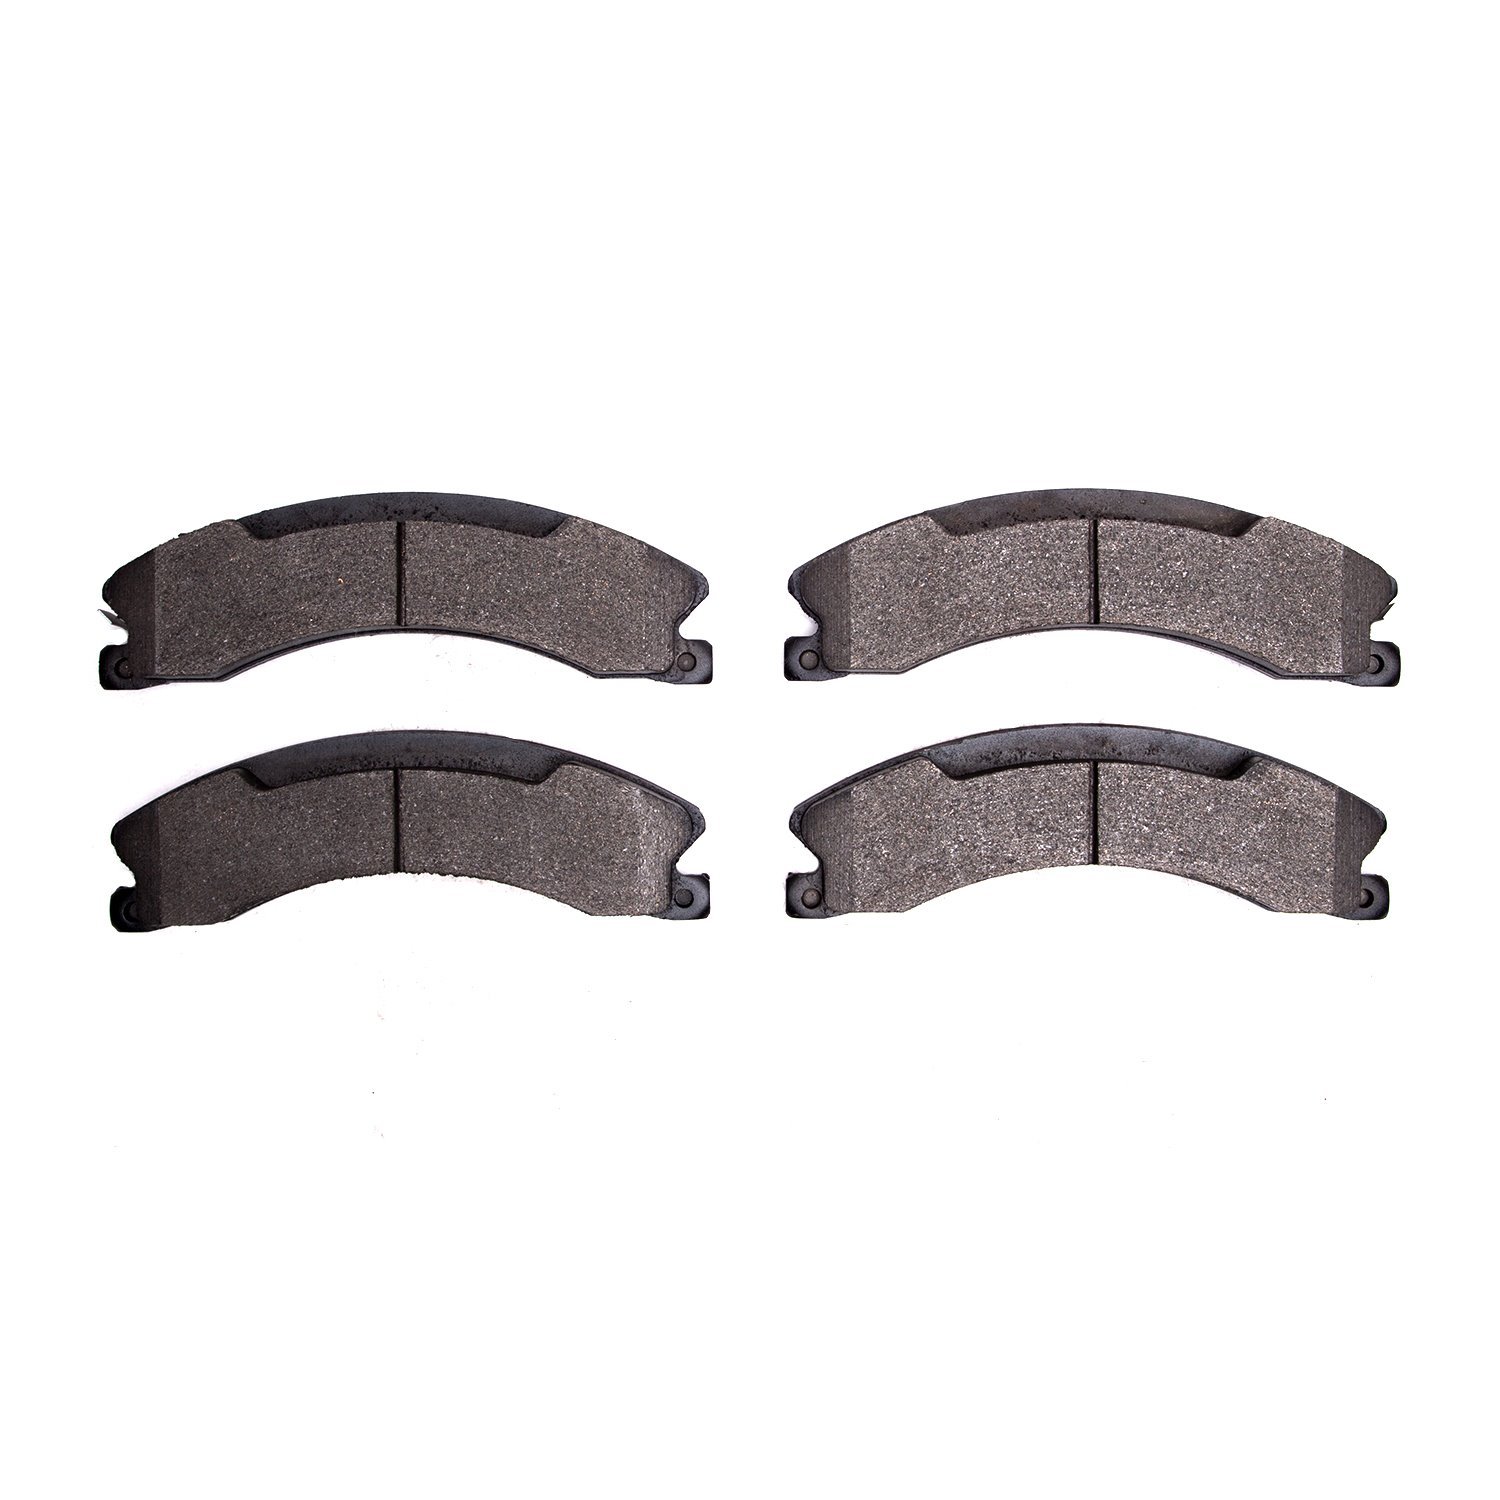 Super-Duty Brake Pads, Fits Select Multiple Makes/Models, Position: Front & Rear